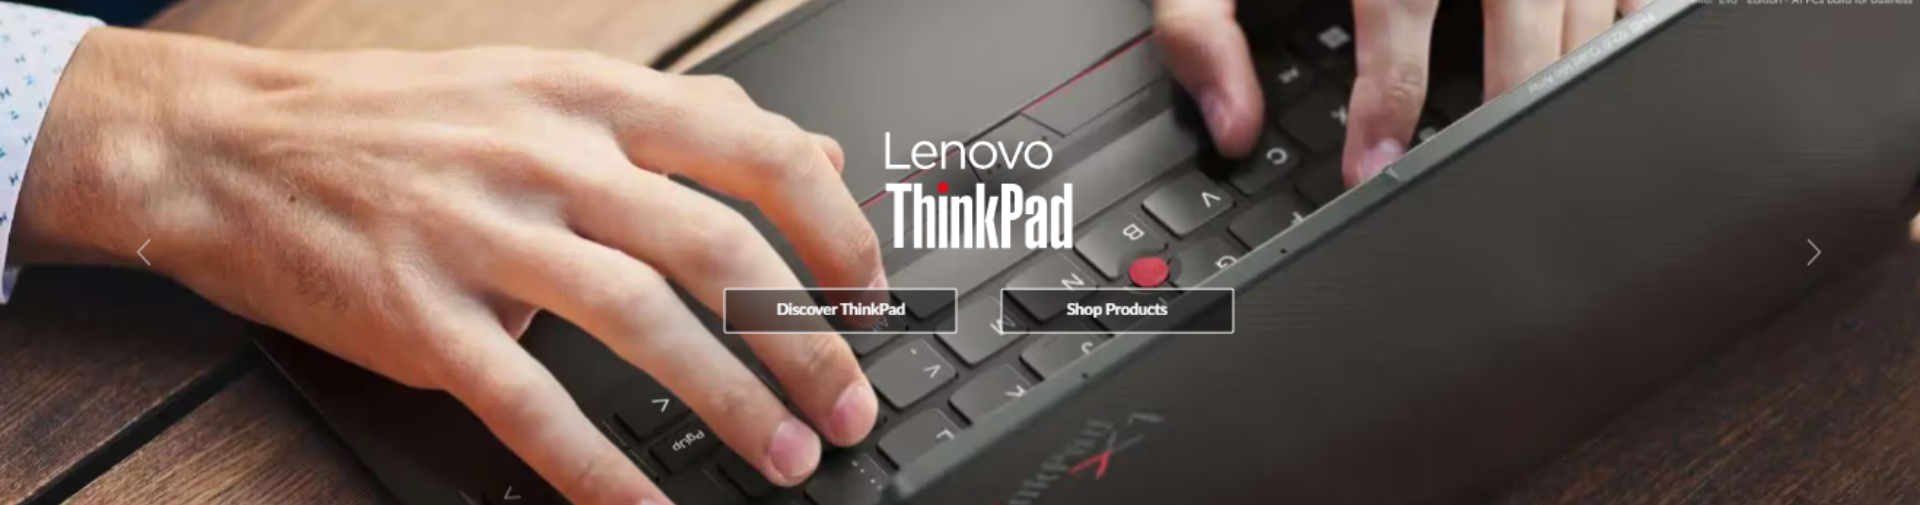 Lenovo Thinkpad Banner